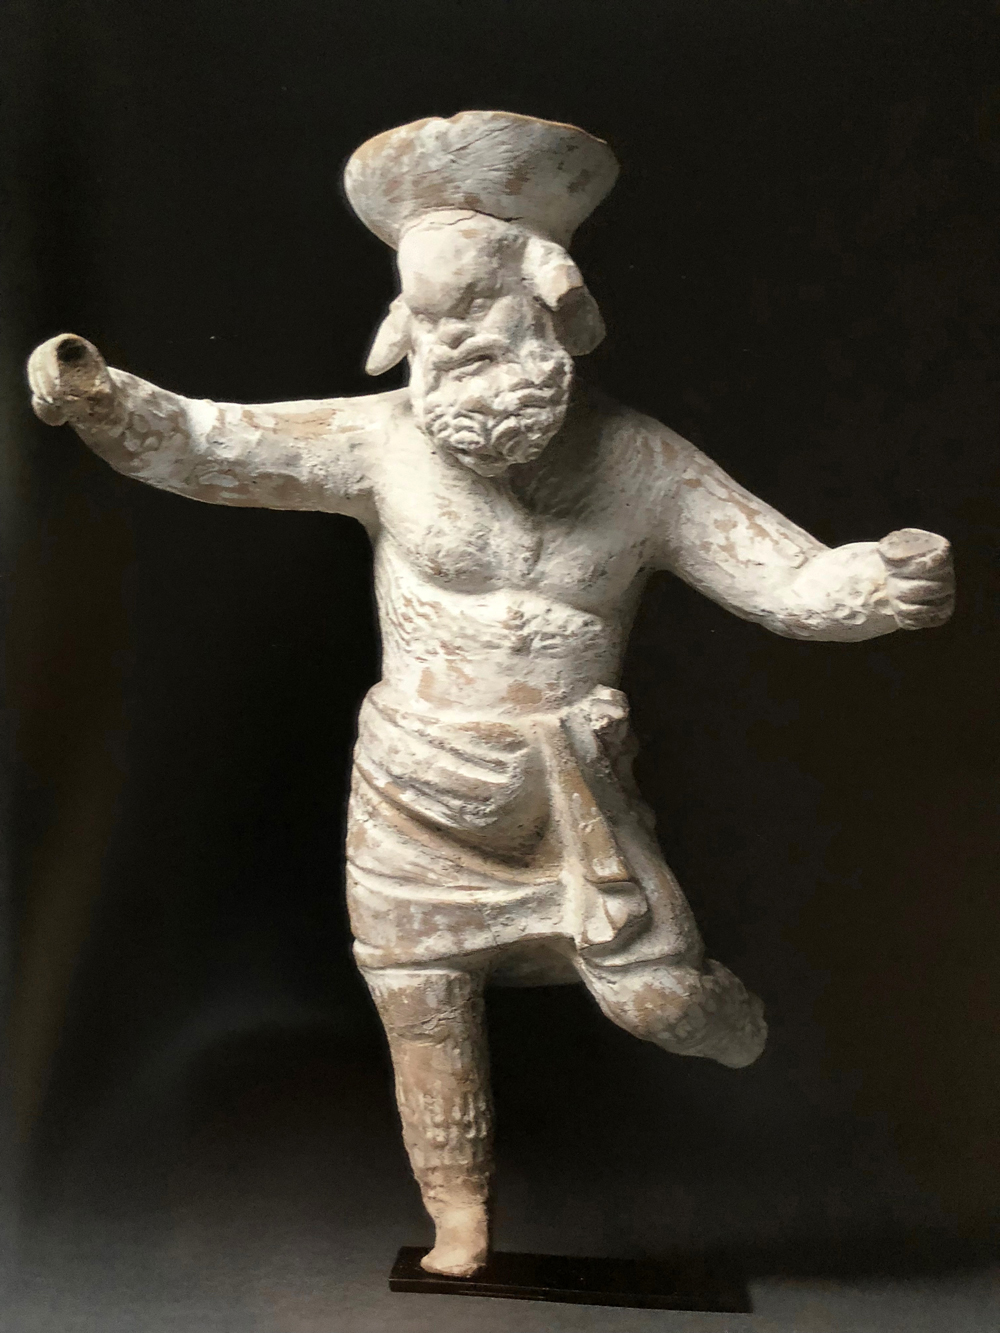 Actor cómico ataviado como papposilenus, parodiando a bailarinas.
Tanagra, siglo III a. C.
